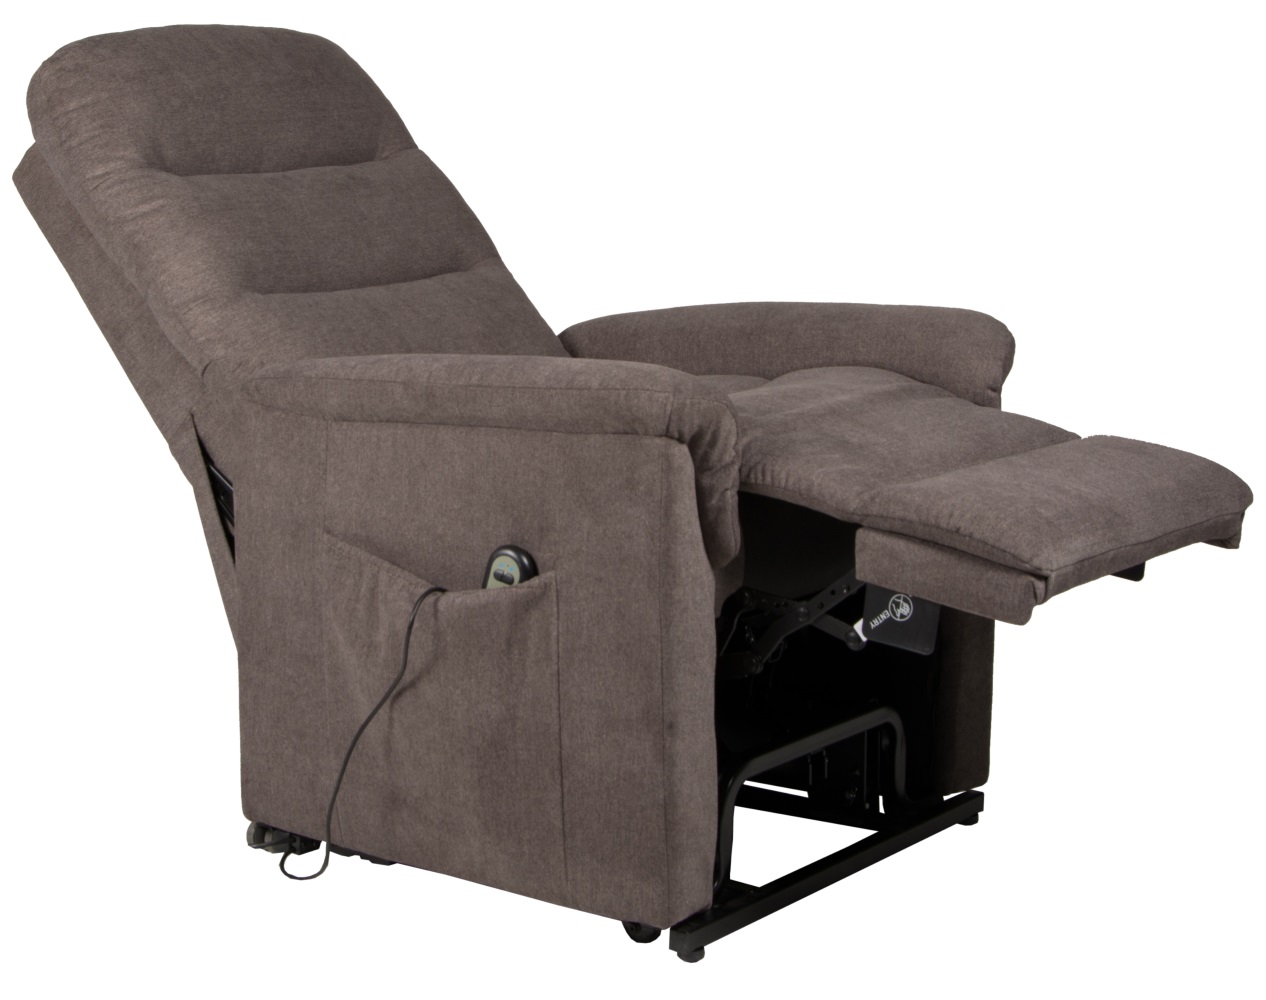  TV-Sessel Whitehorse Motor-/Aufstehhilfe Fernsehsessel Relaxsessel Sessel